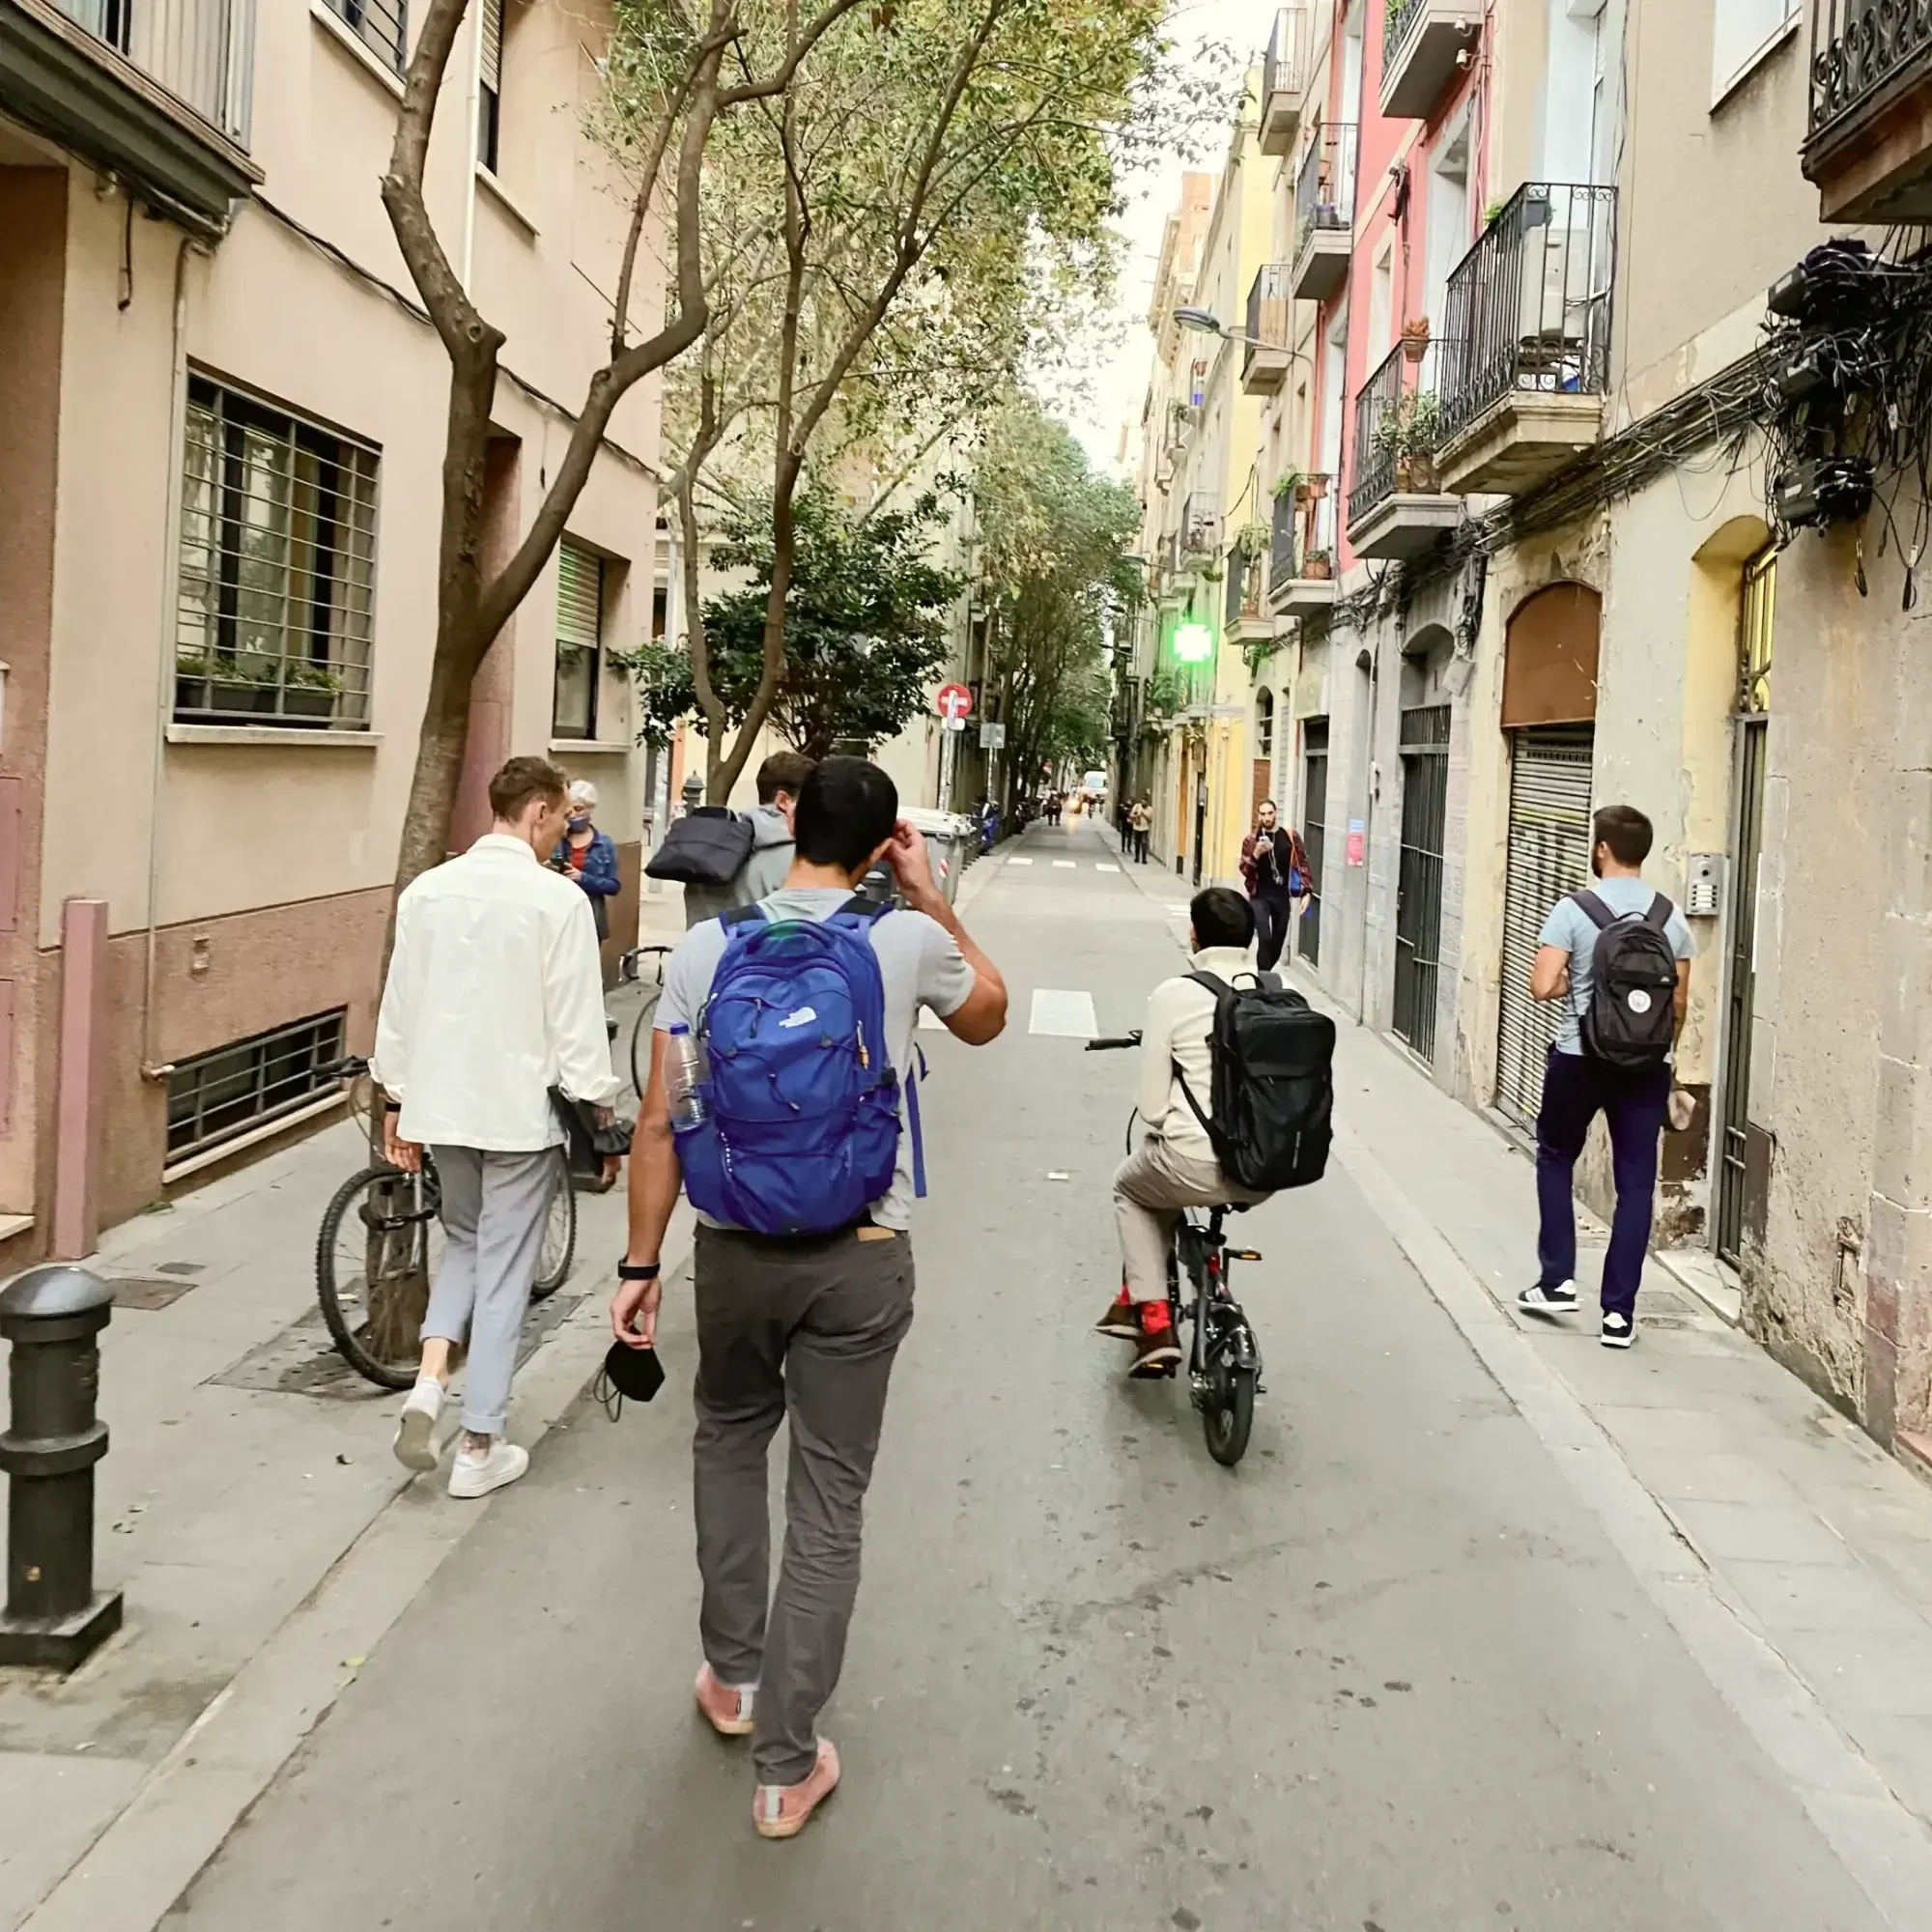 5 Men walking down a street in Barcelona, carrying backpacks, one is riding a bike